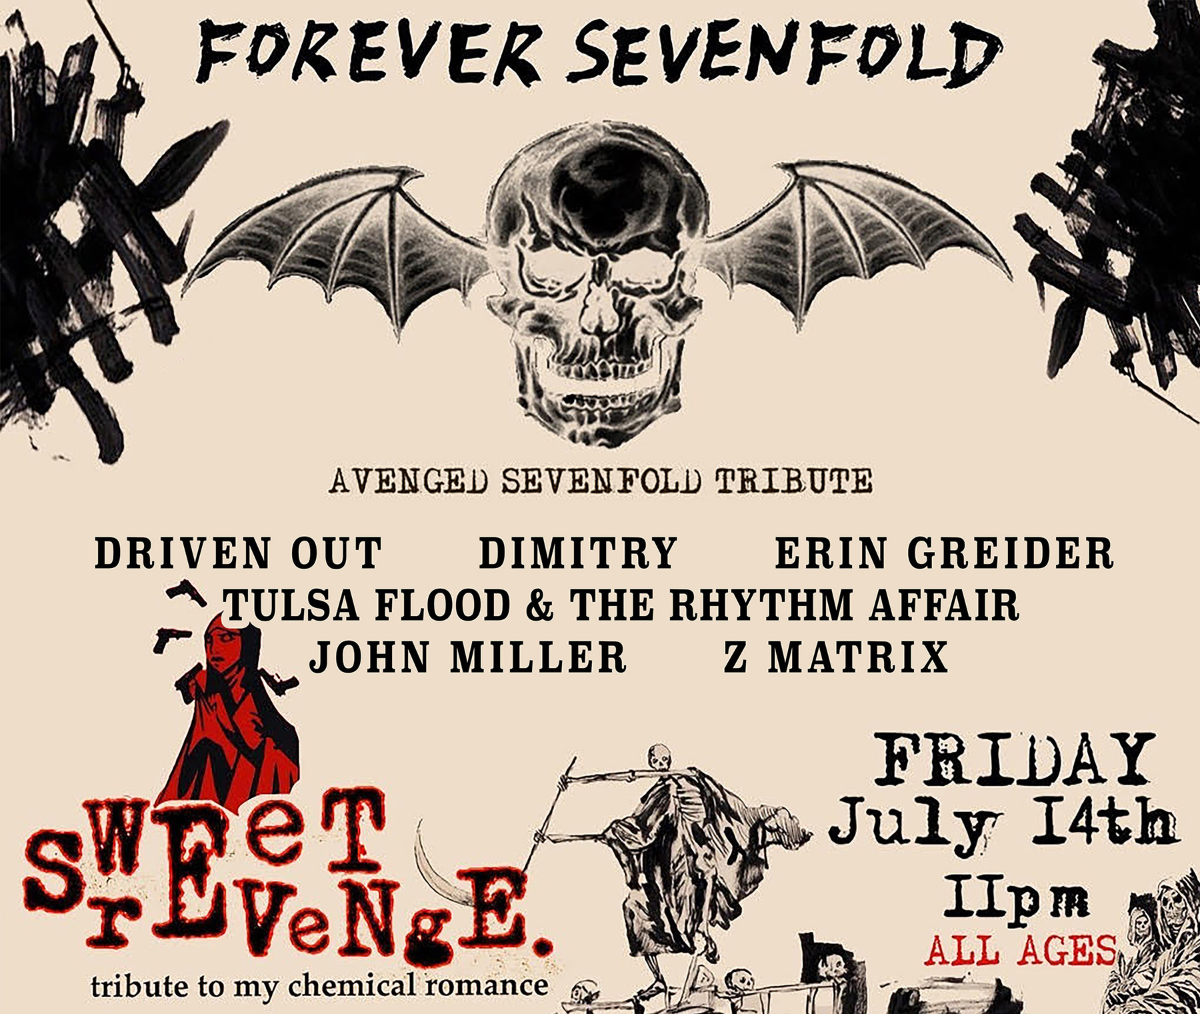 Sweet Revenge (A Tribute to My Chemical Romance), Forever Sevenfold (Avenge Sevenfold Tribute),   Tulsa Flood & The Rhythm Affair